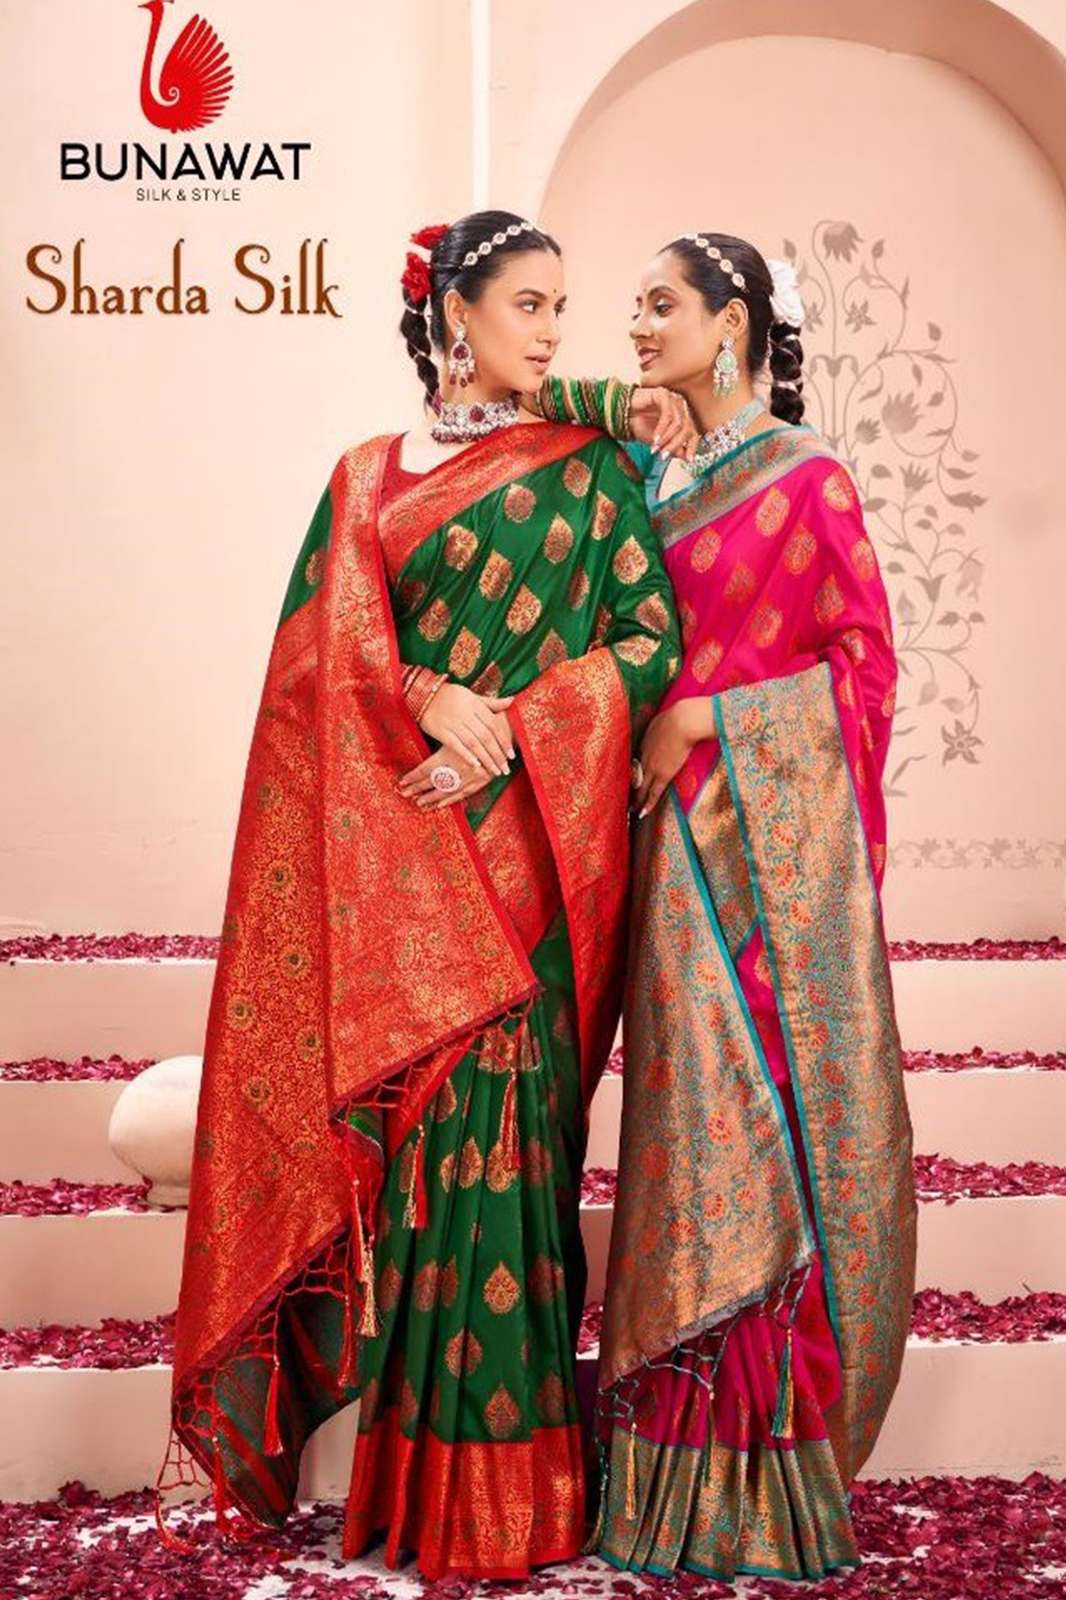 BUNAWAT SHARDA SILK Kanjivaram Silk Saree In beautiful Multicolors